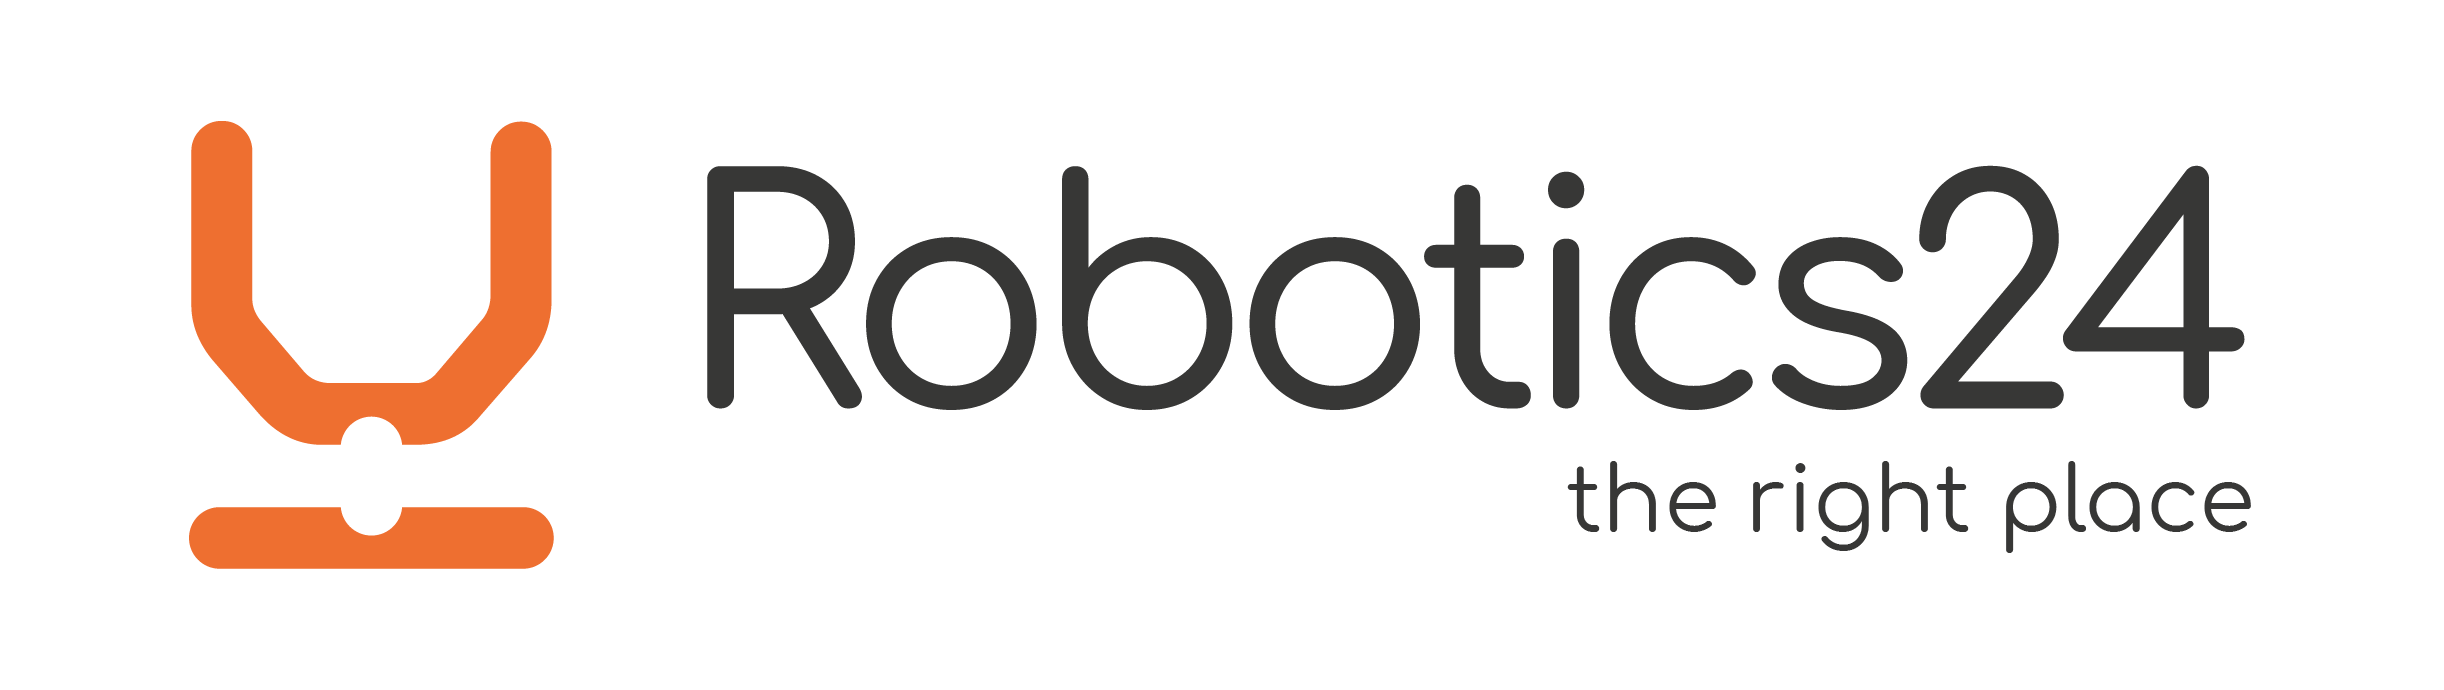 ROBOTICS24